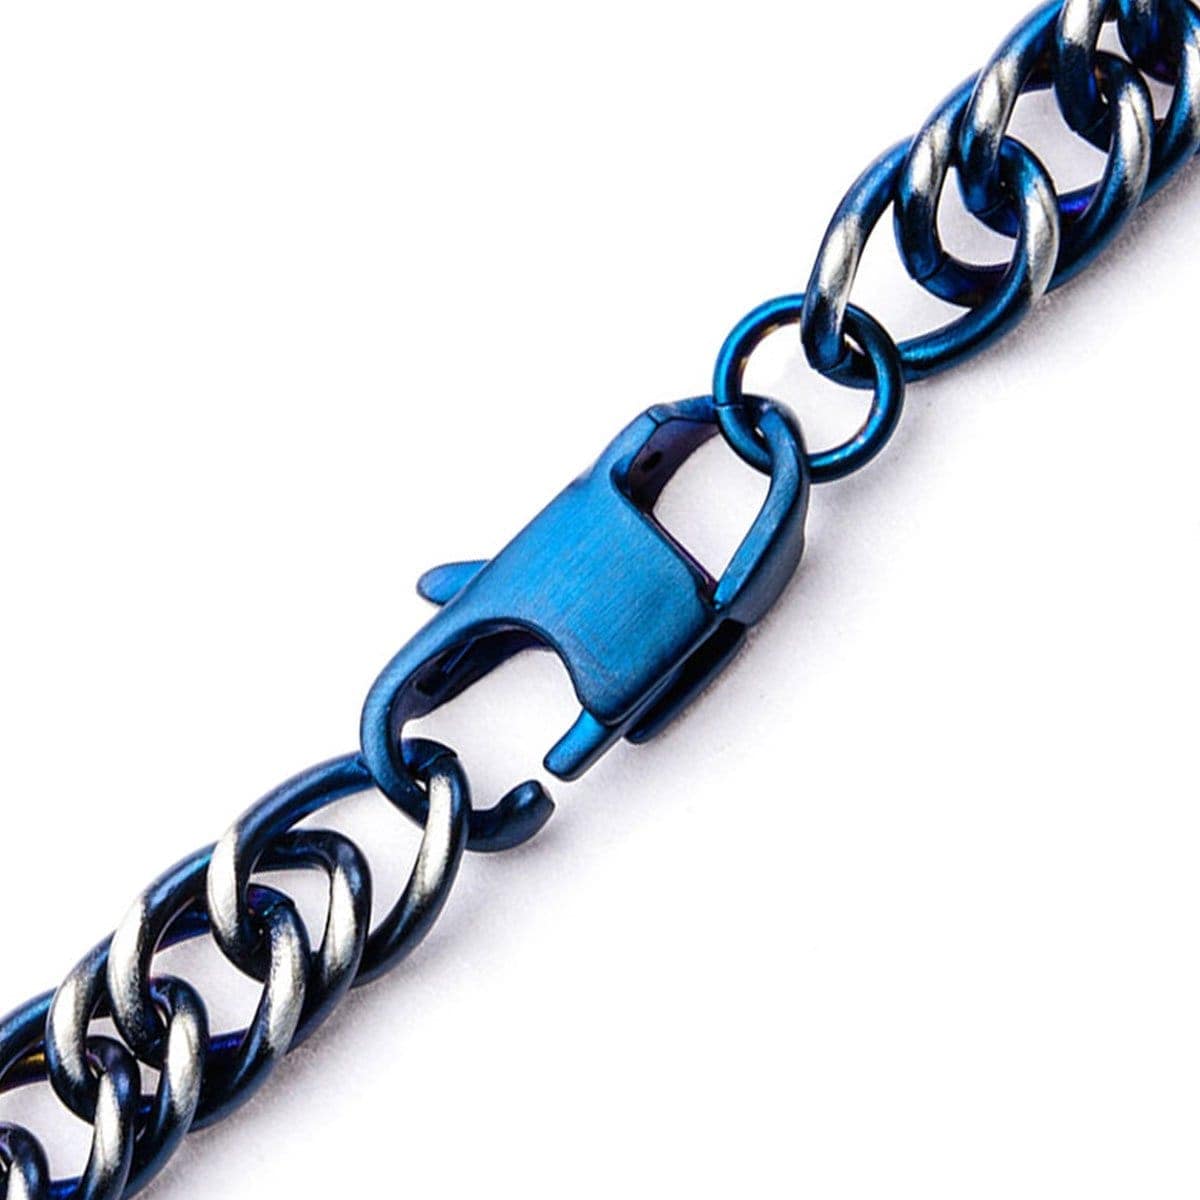 INOX JEWELRY Bracelets Blue and Silver Tone Stainless Steel Denim Fade Curb Chain Bracelet BR7622B